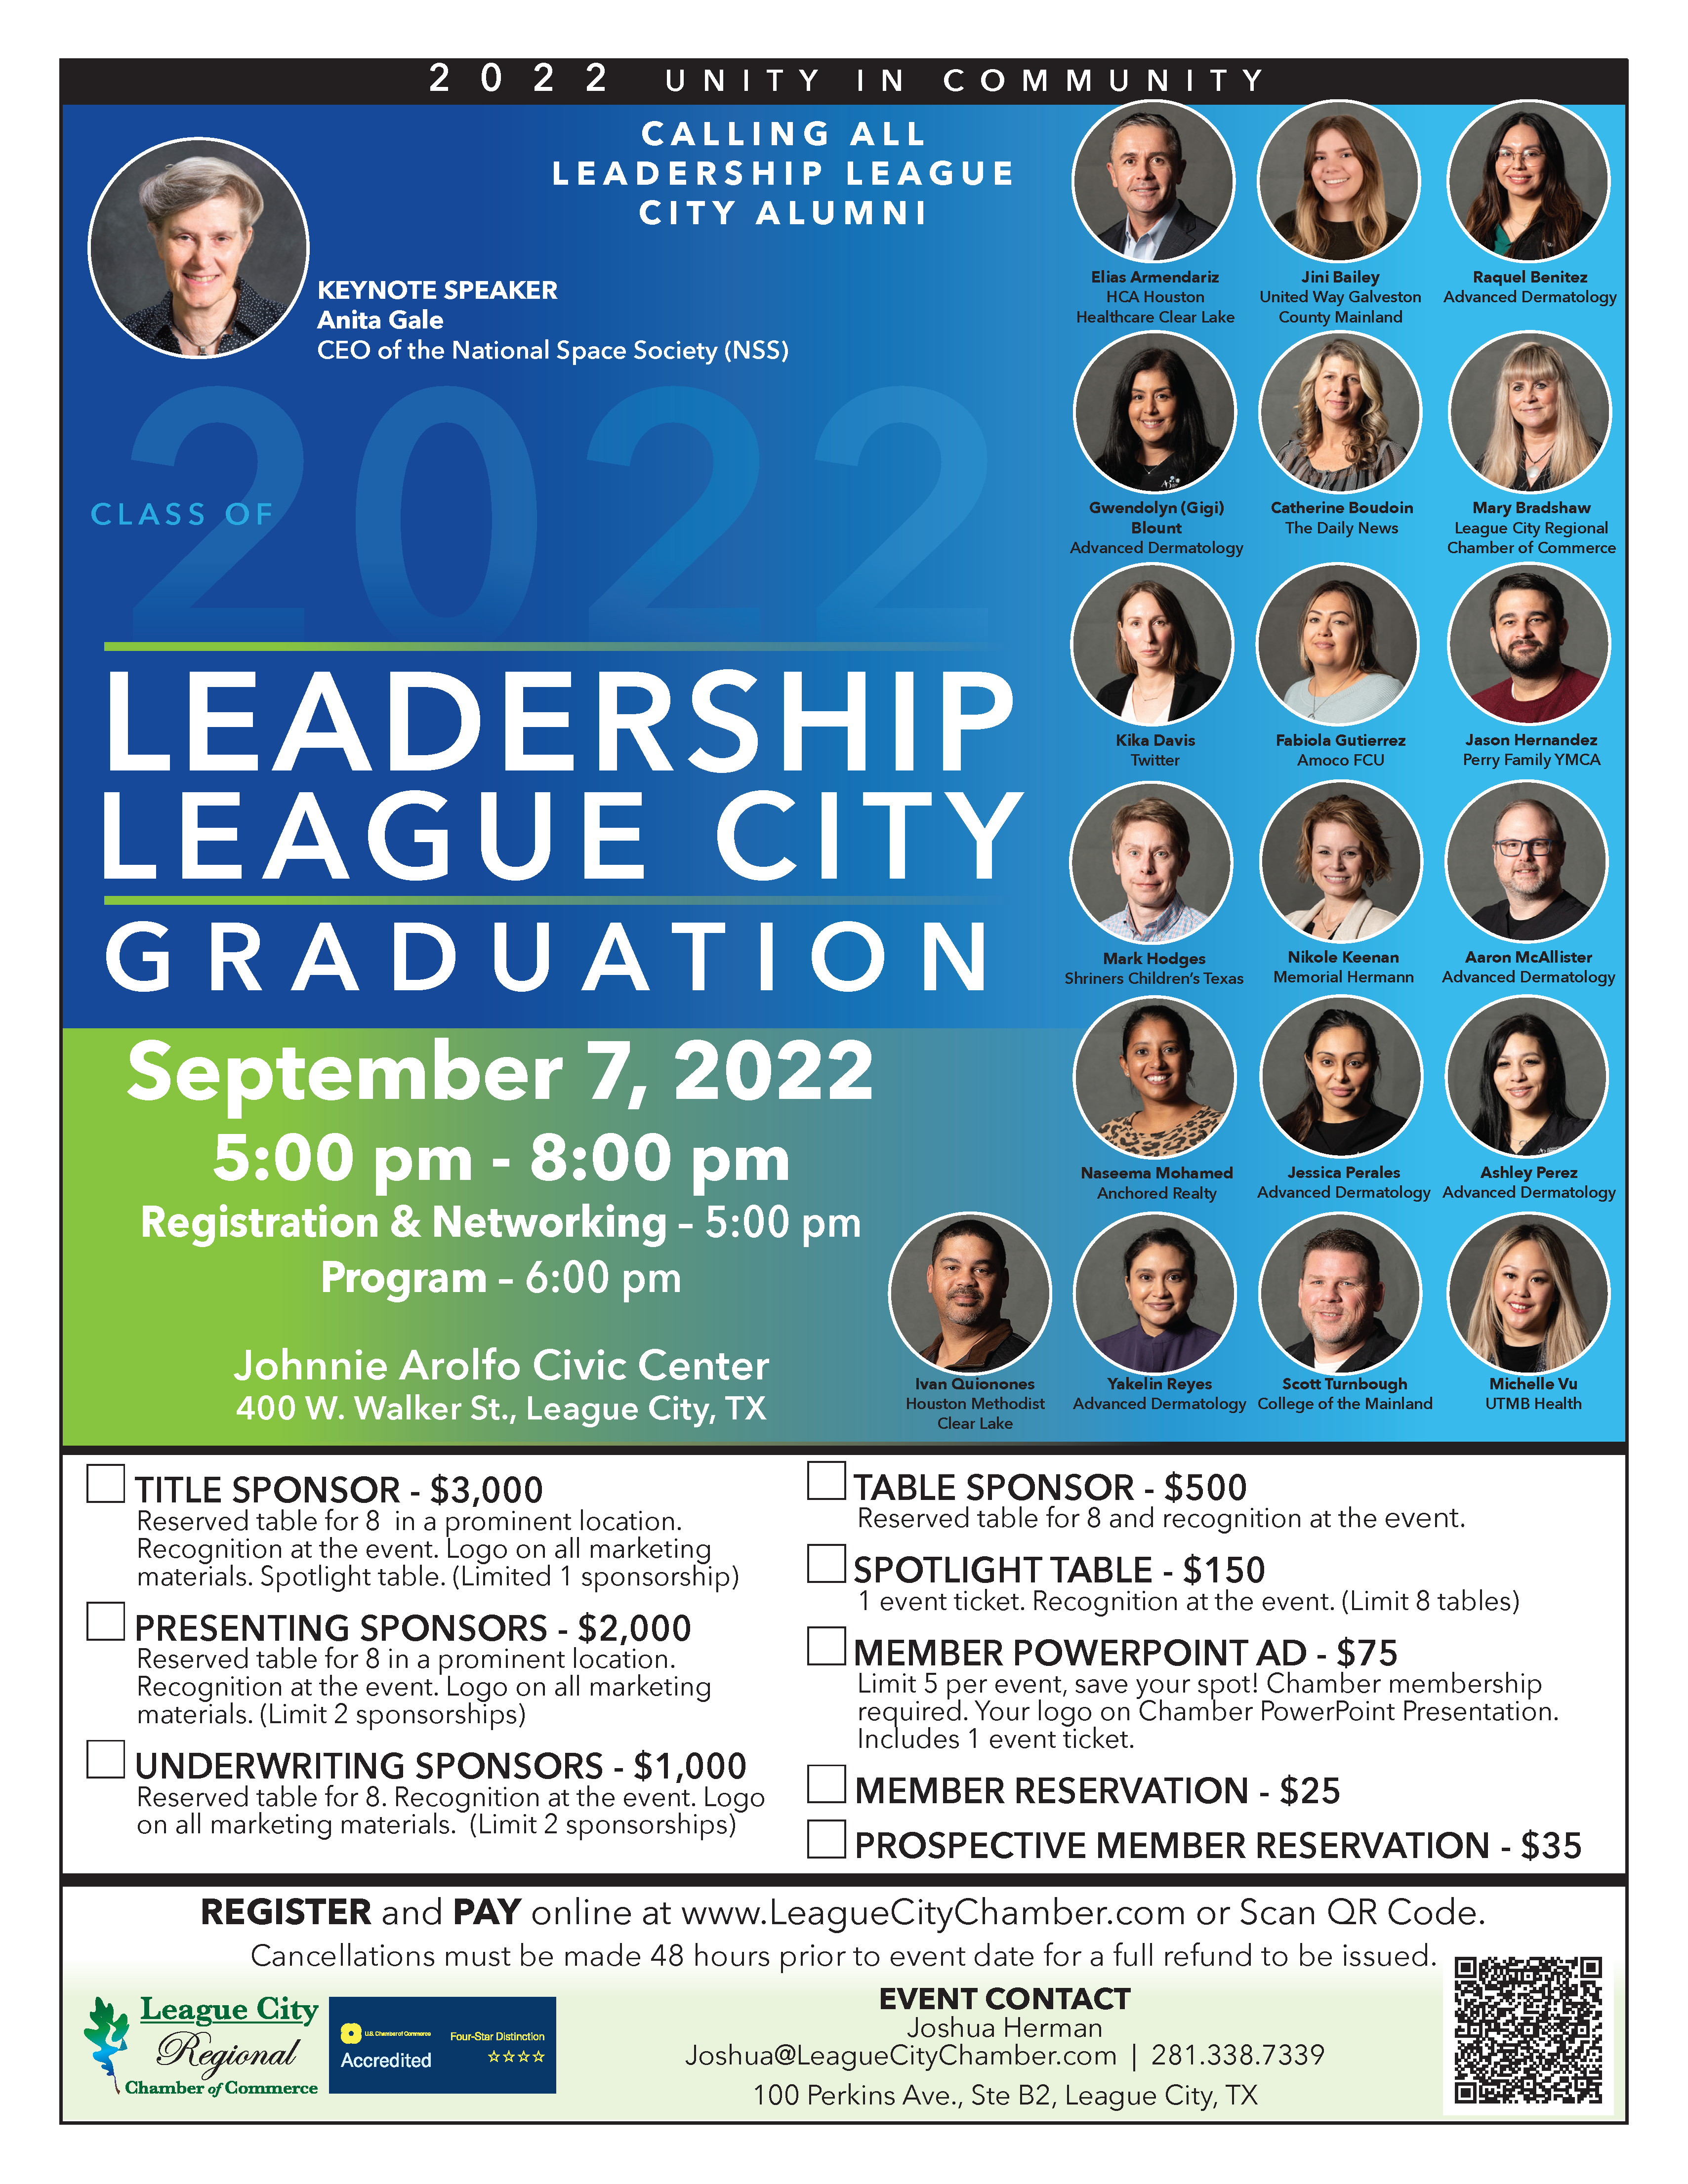 Leadership League City Graduation is near!